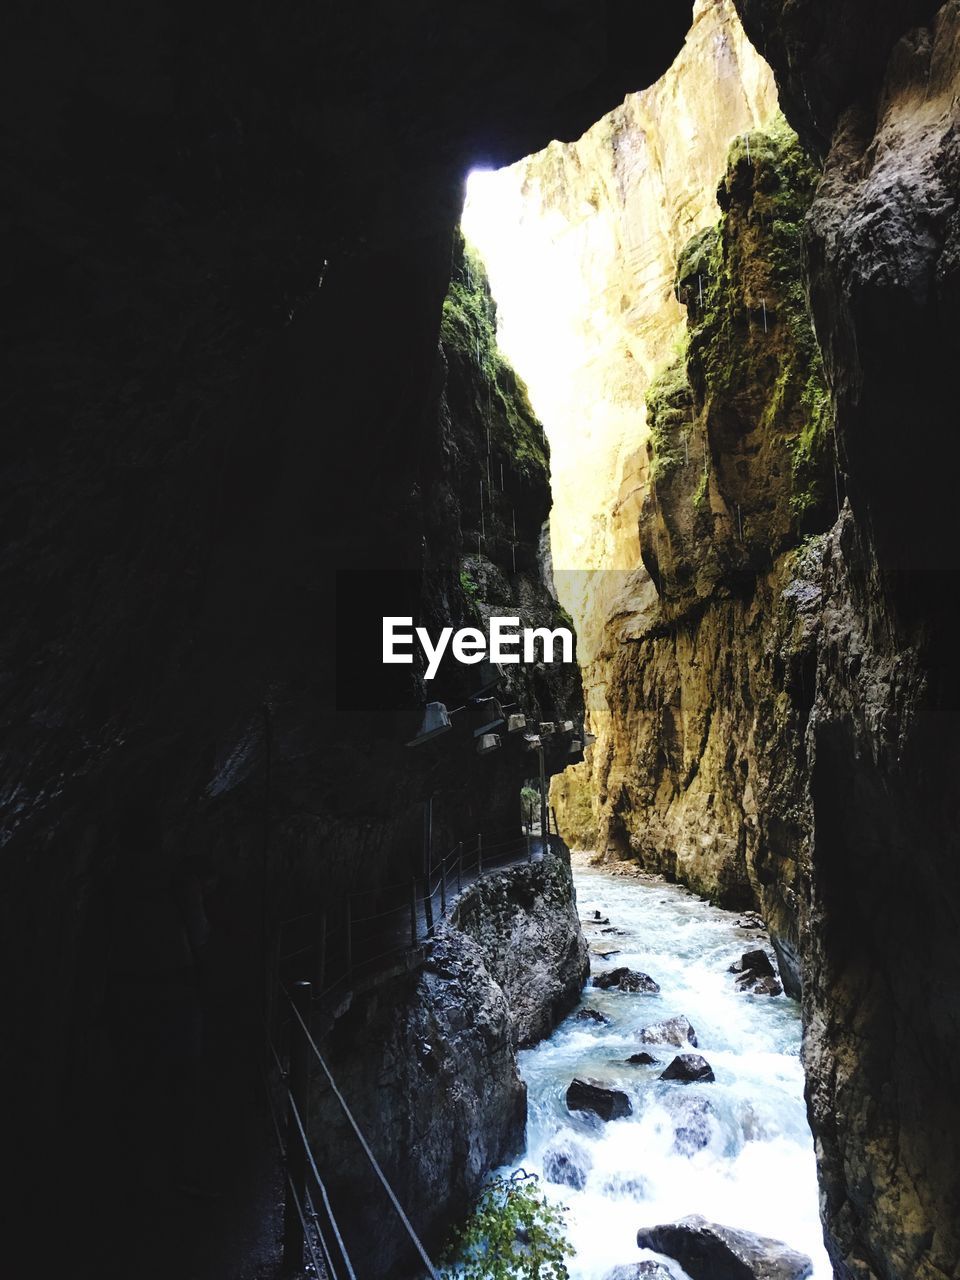 Stream flowing through cave